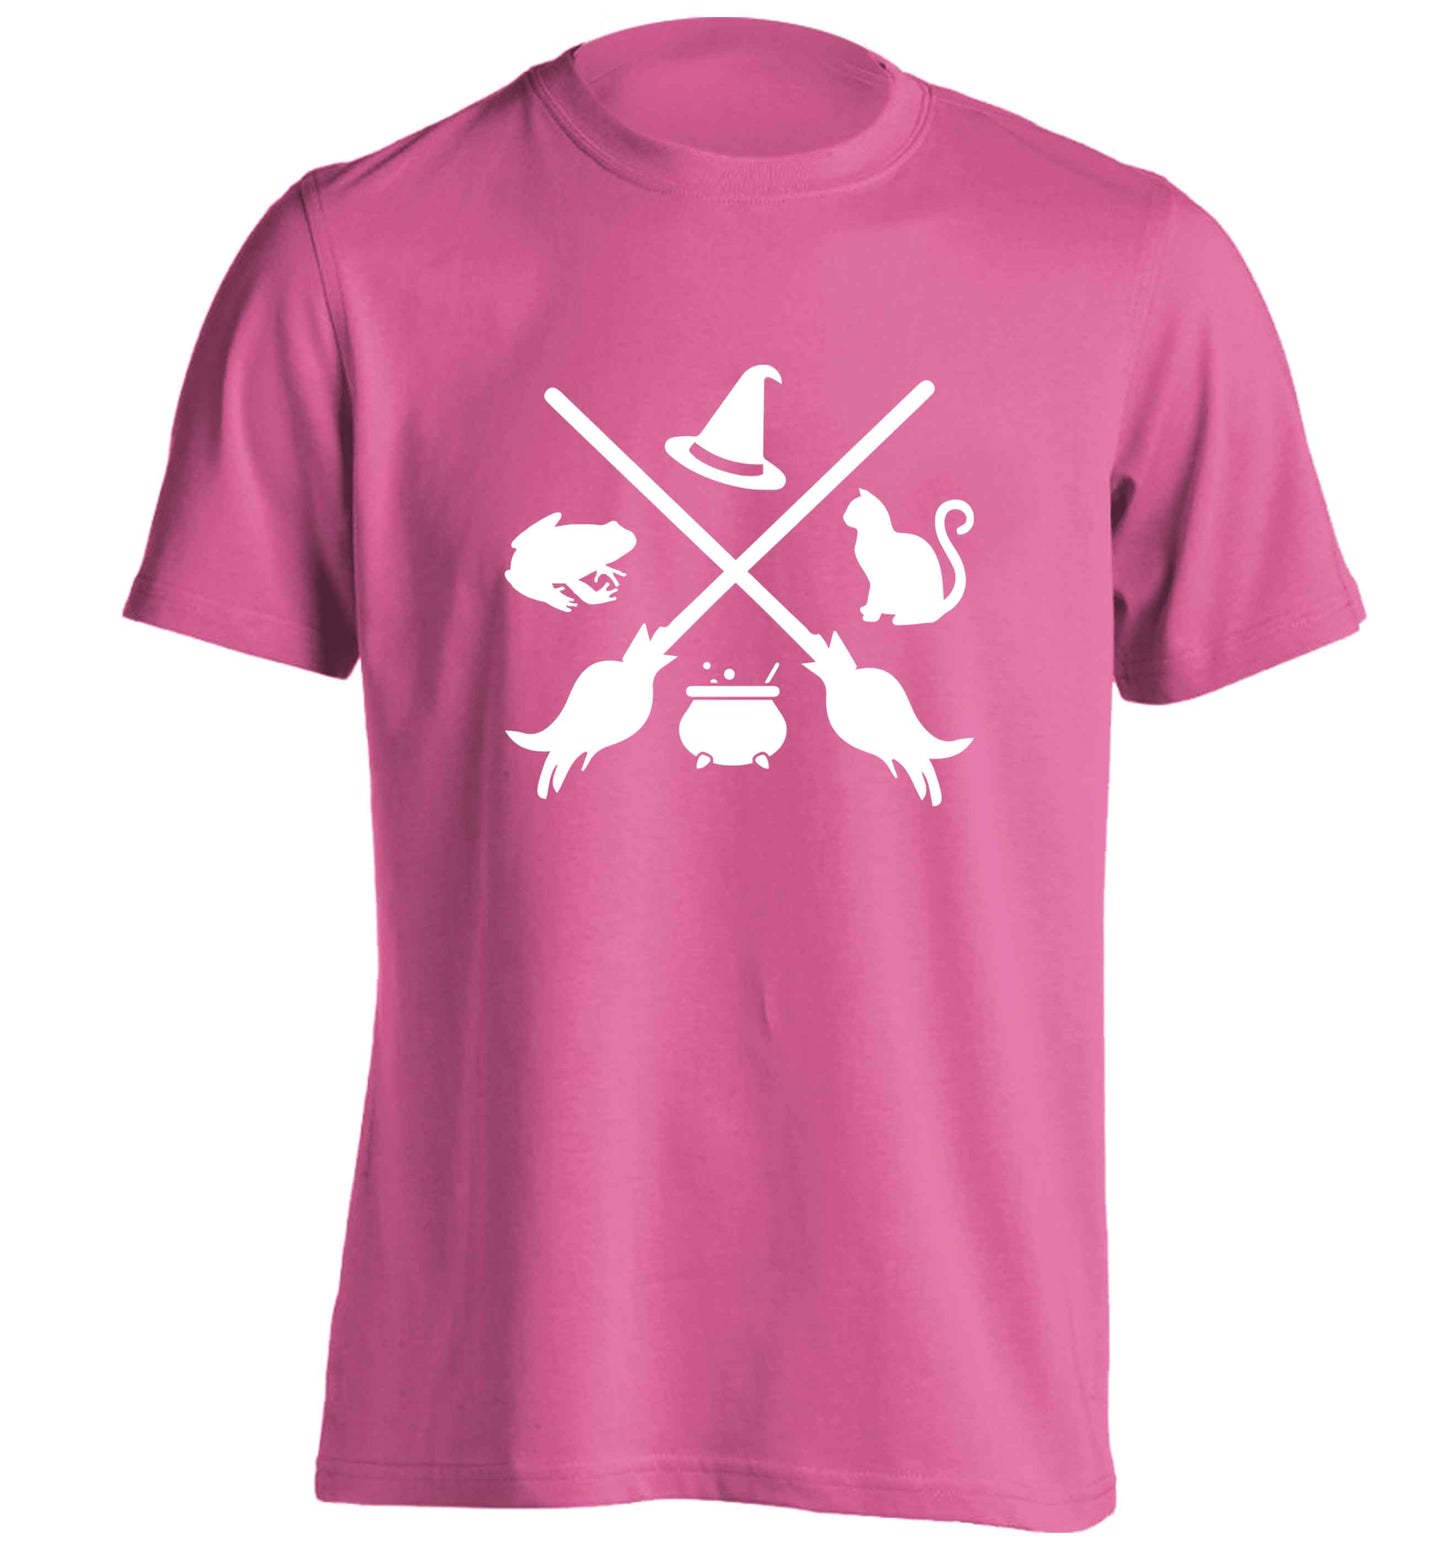 Witch symbol adults unisex pink Tshirt 2XL